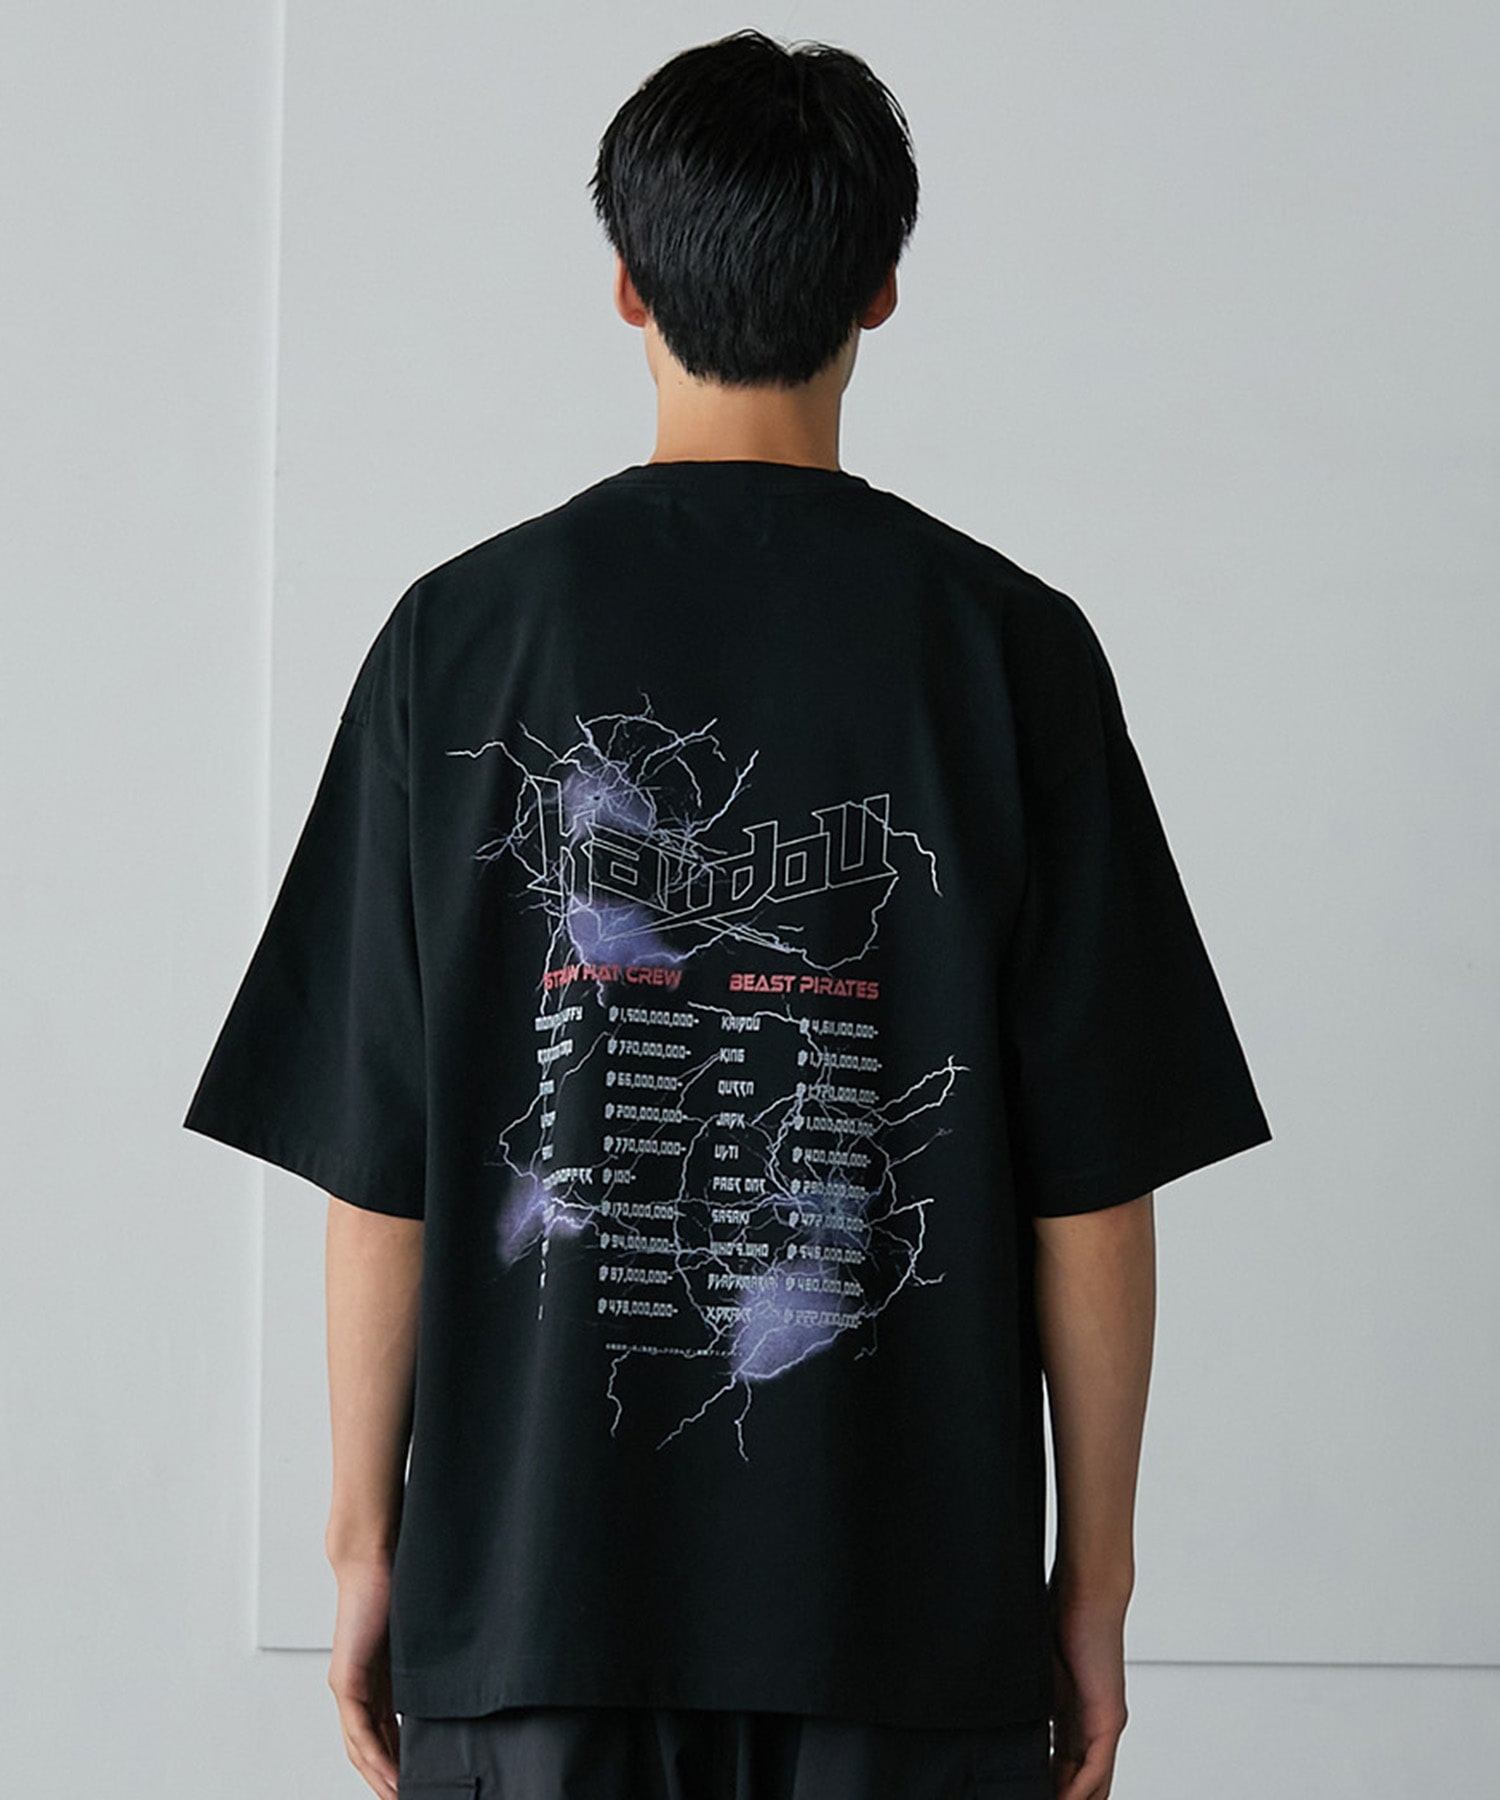 UNITEDTOKYO × ONEPIECE コラボTシャツ